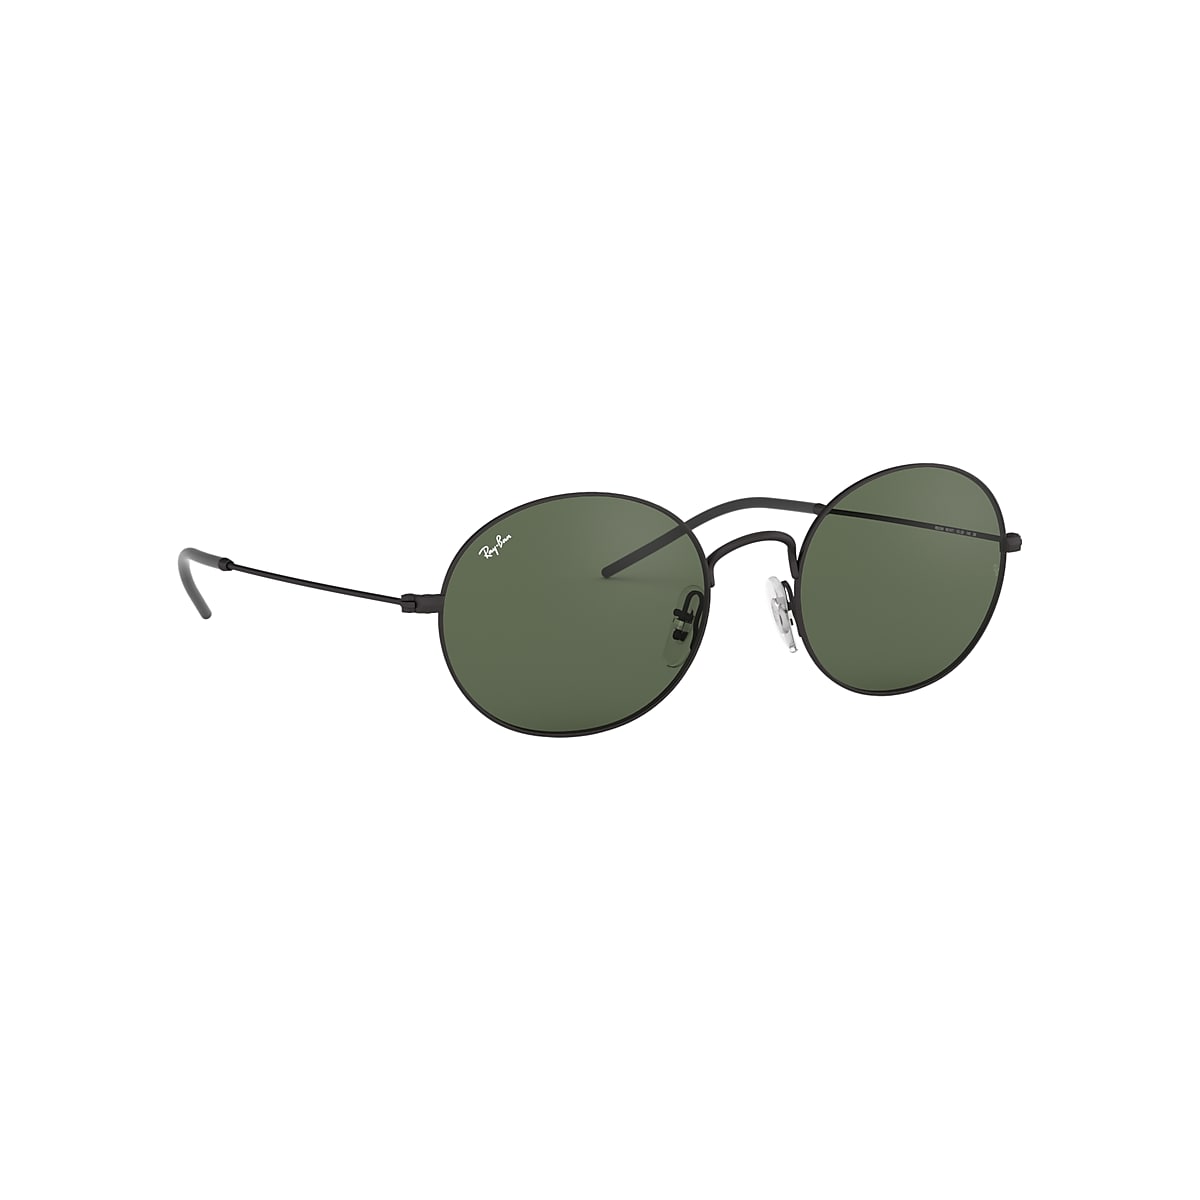 Ray-ban Beat Sunglasses in Black and Green | Ray-Ban®